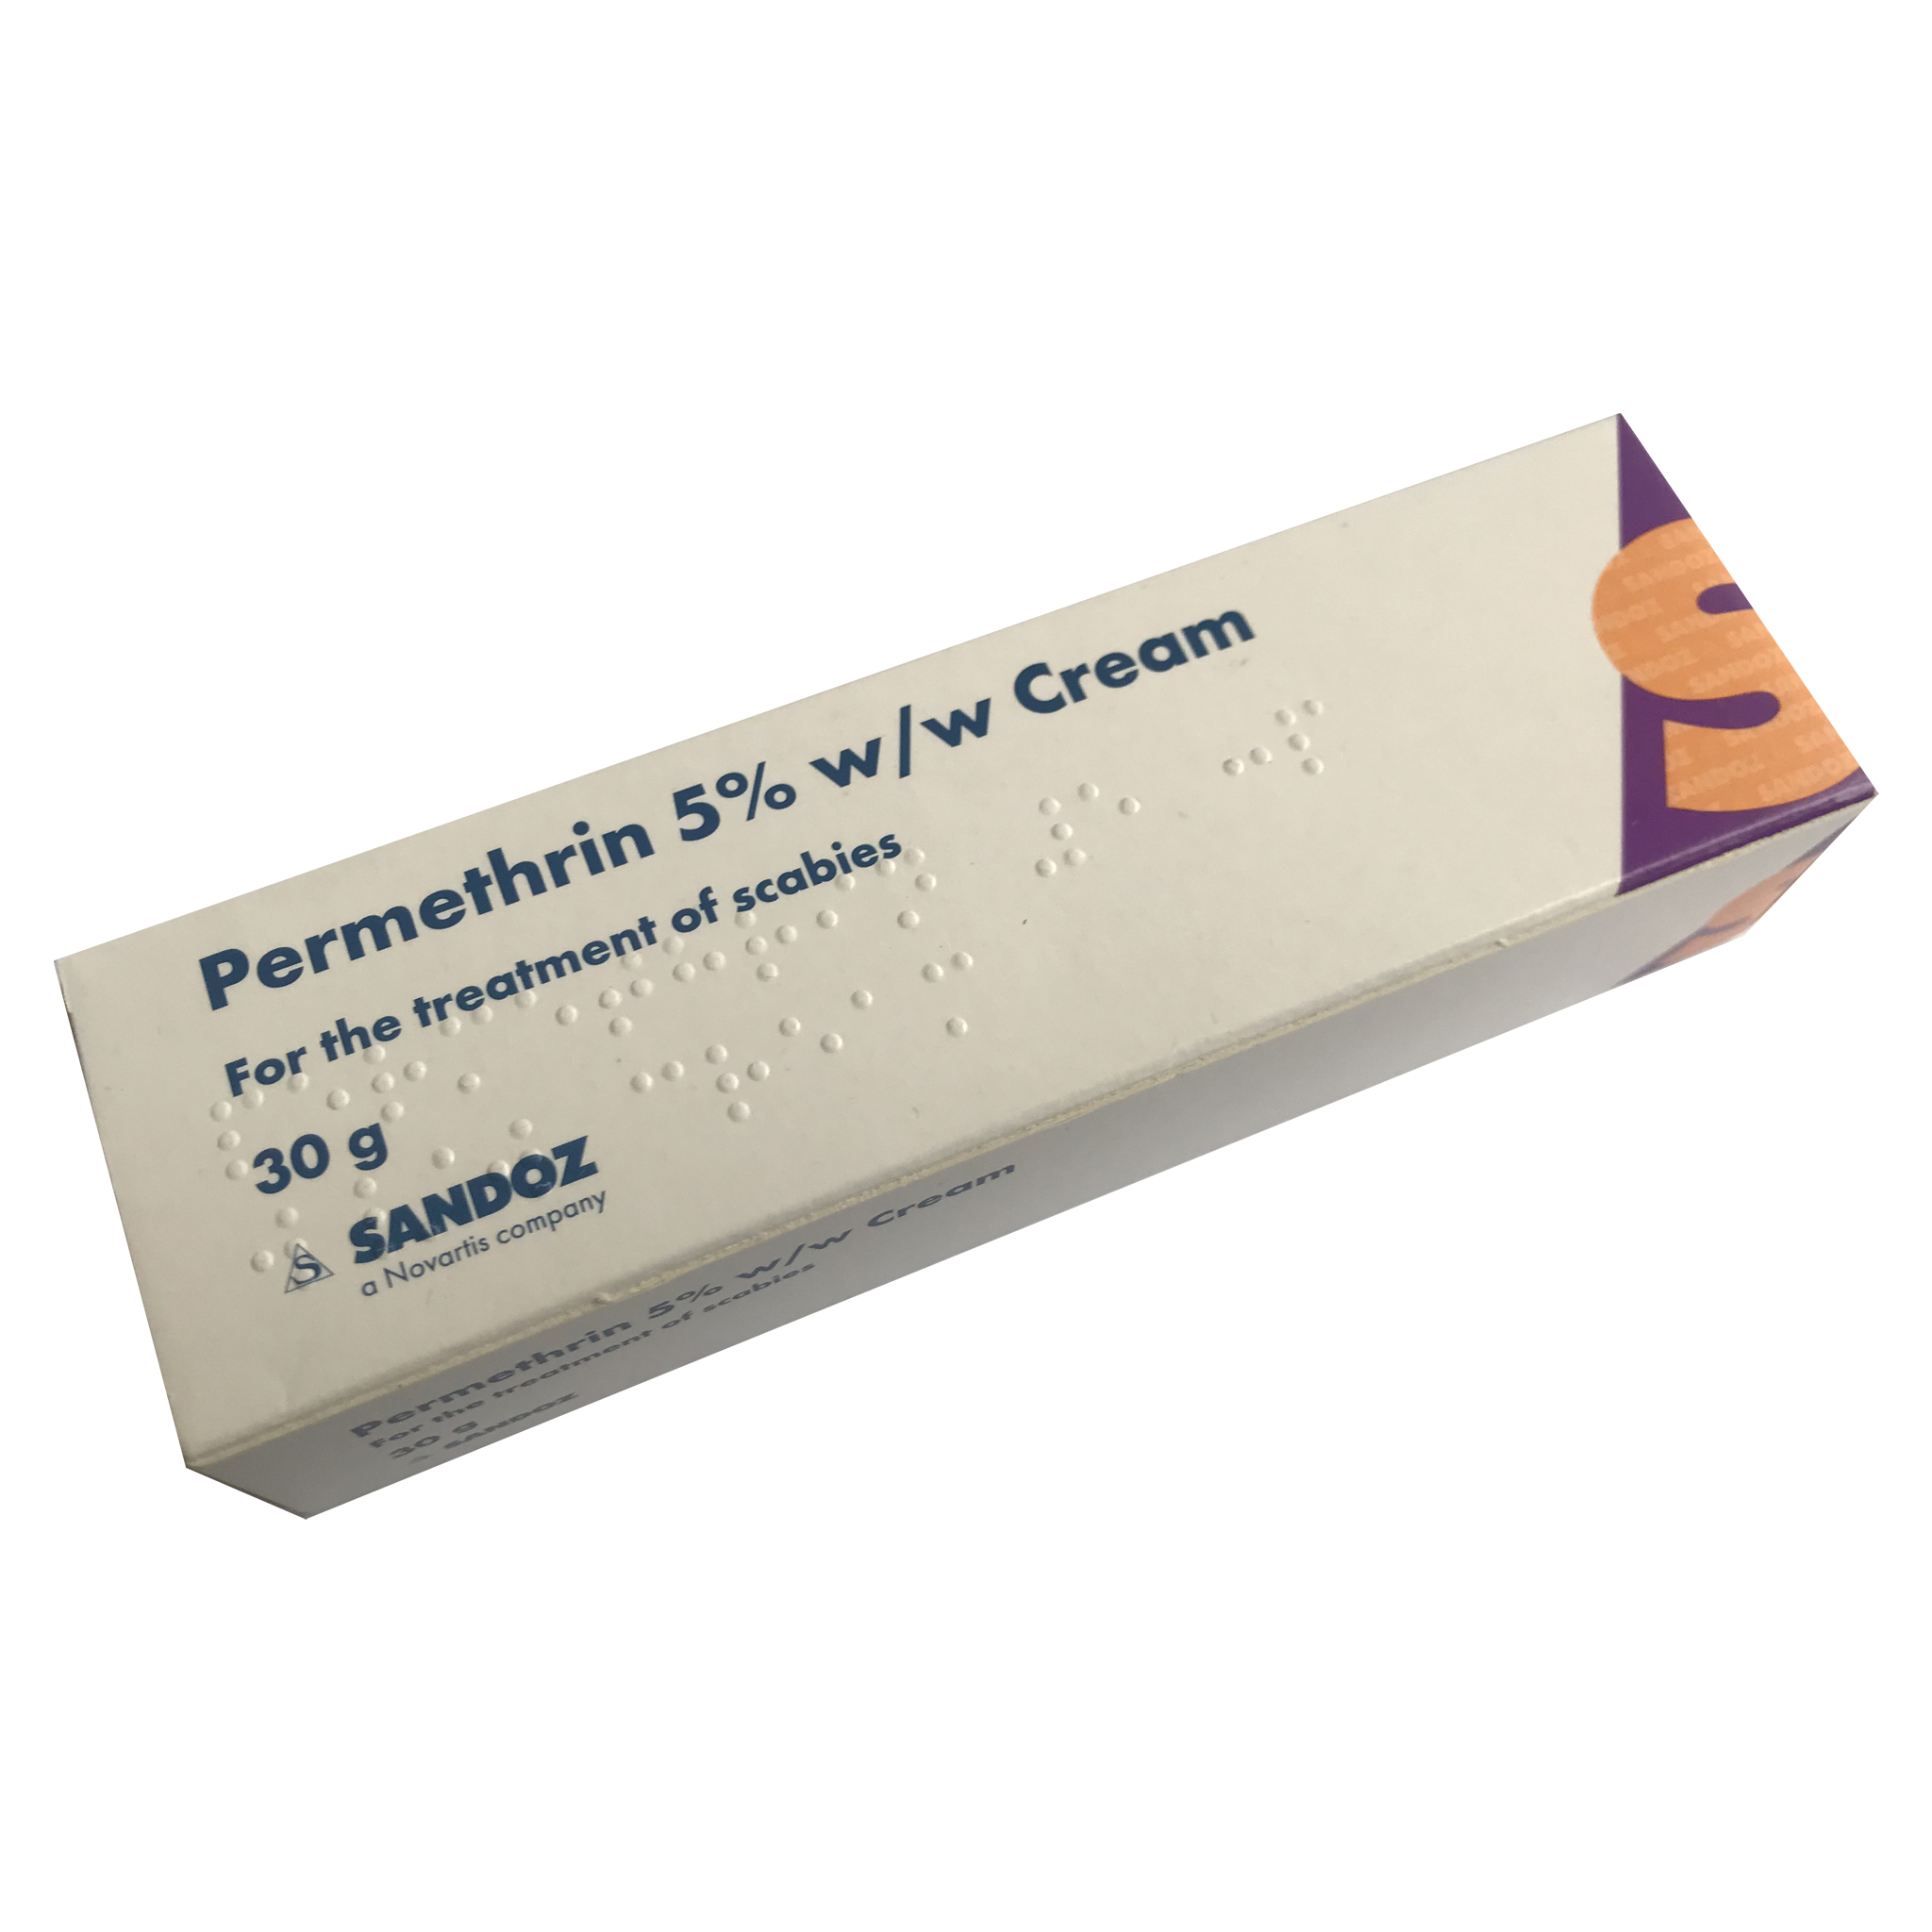 Permethrin 5% cream (30g) - 9 Packs